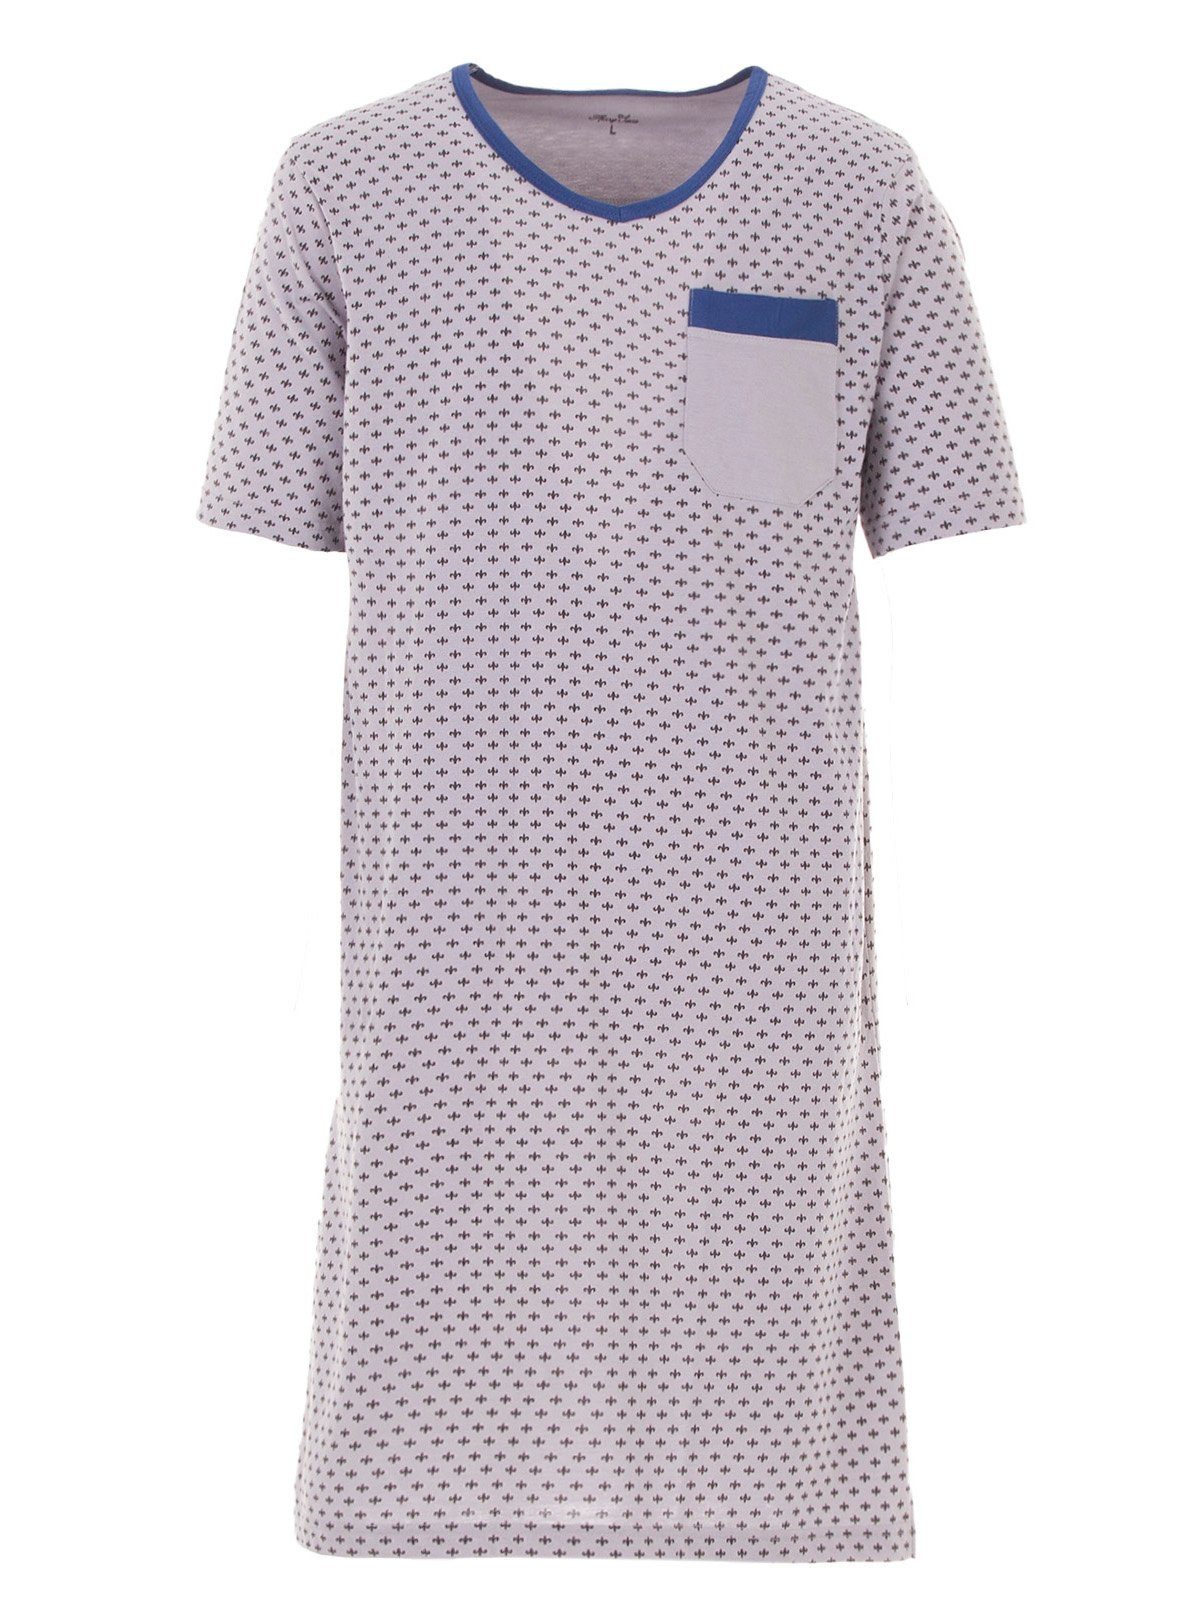 Henry Terre Nachthemd Nachthemd Kurzarm - Lilie grau